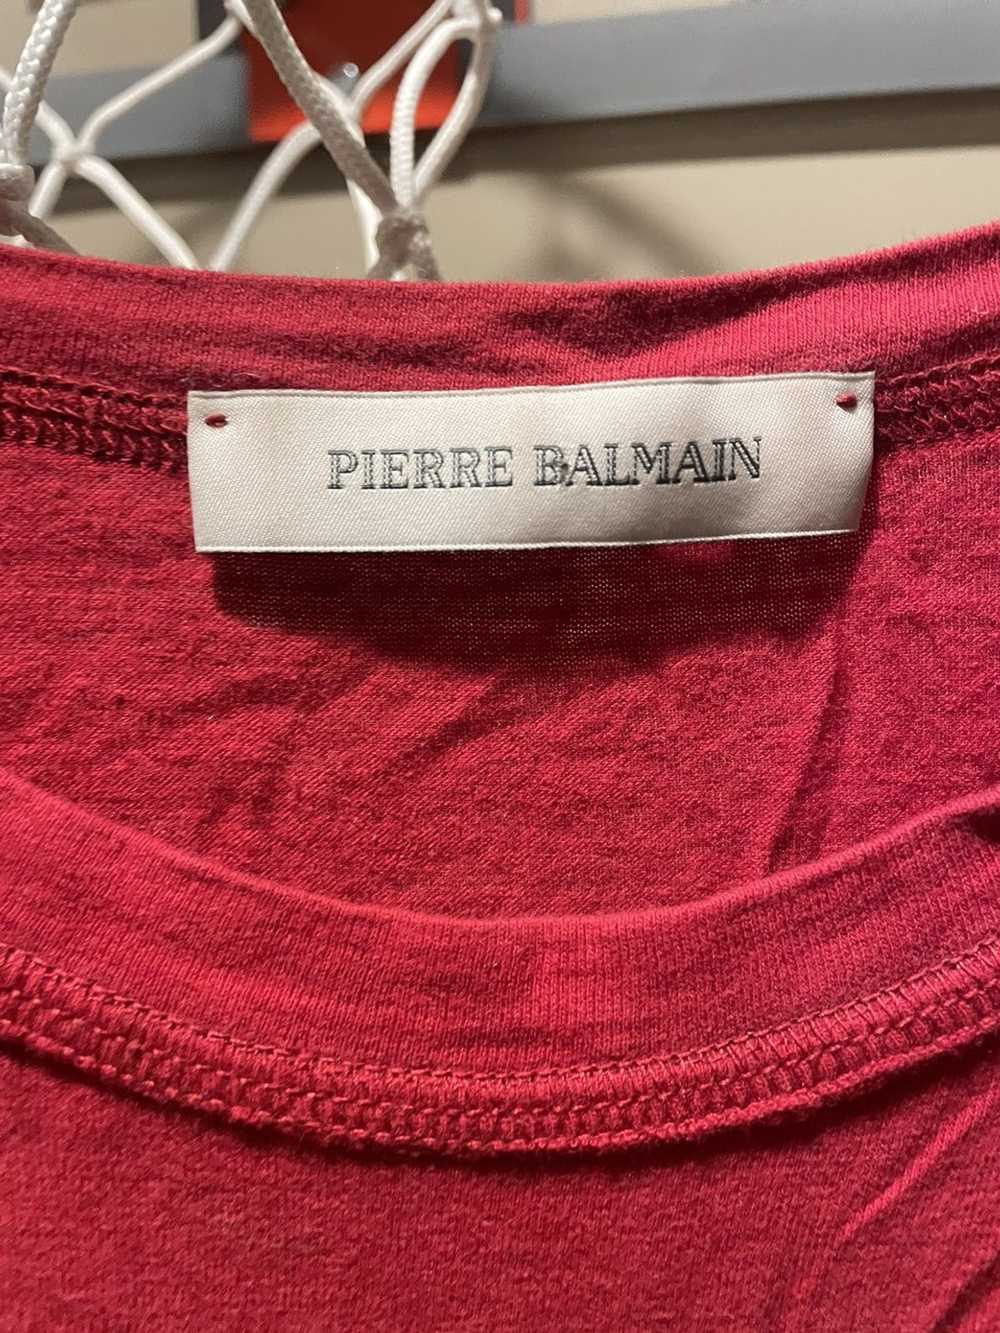 Pierre Balmain Balmain t shirt - image 3